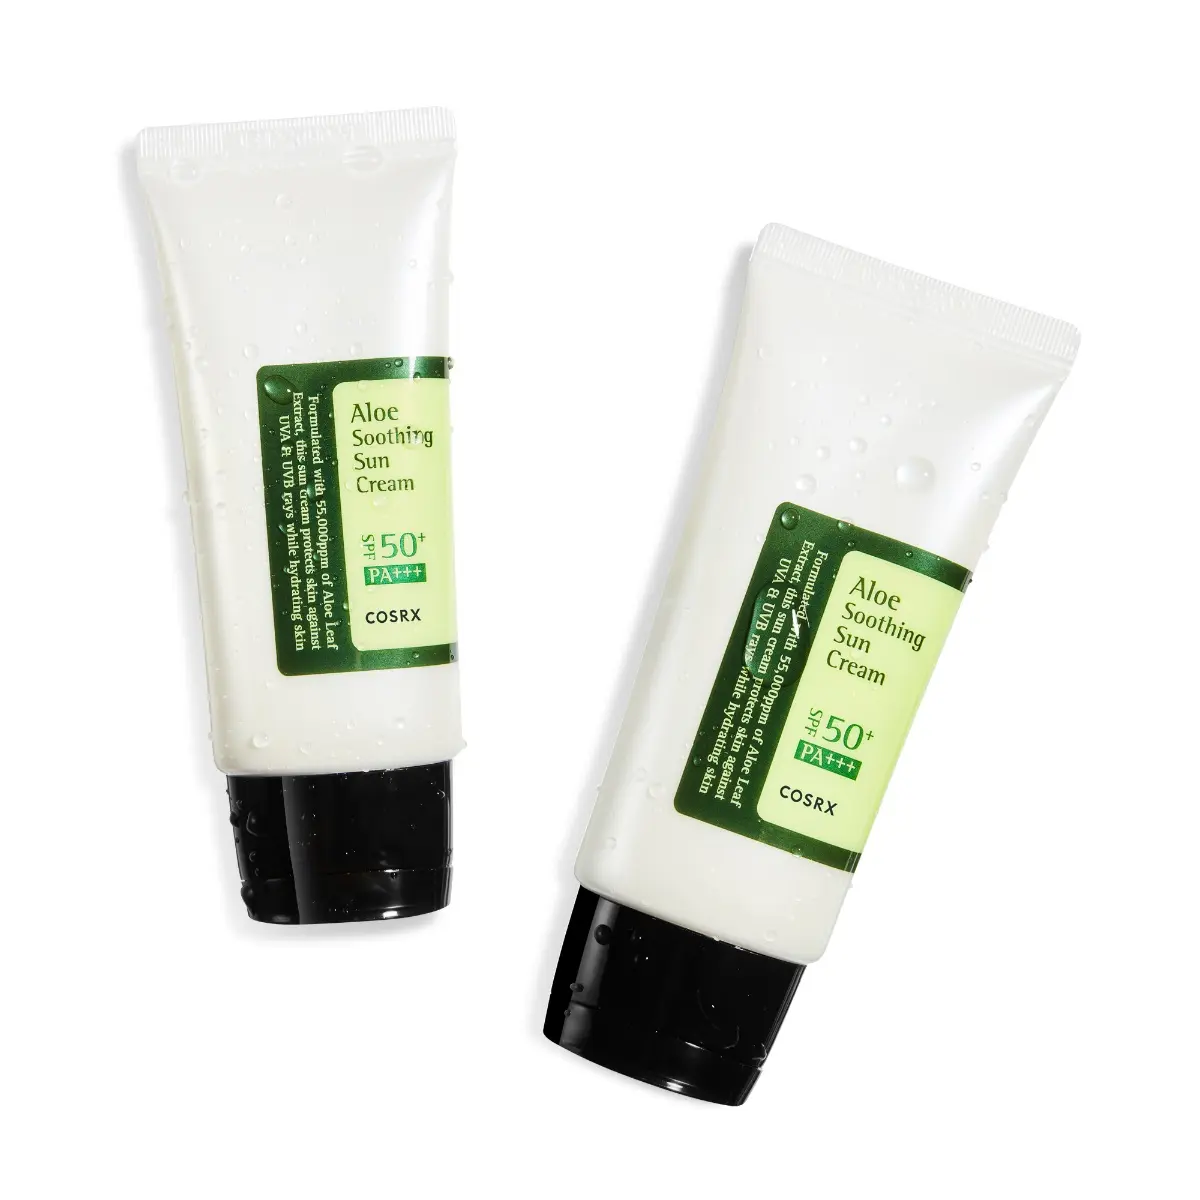 Großhandel Original Korea Marke Hautpflege Cosrx Sonnenschutz Aloe Vera Beruhigende Sonnencreme SPF50 PA